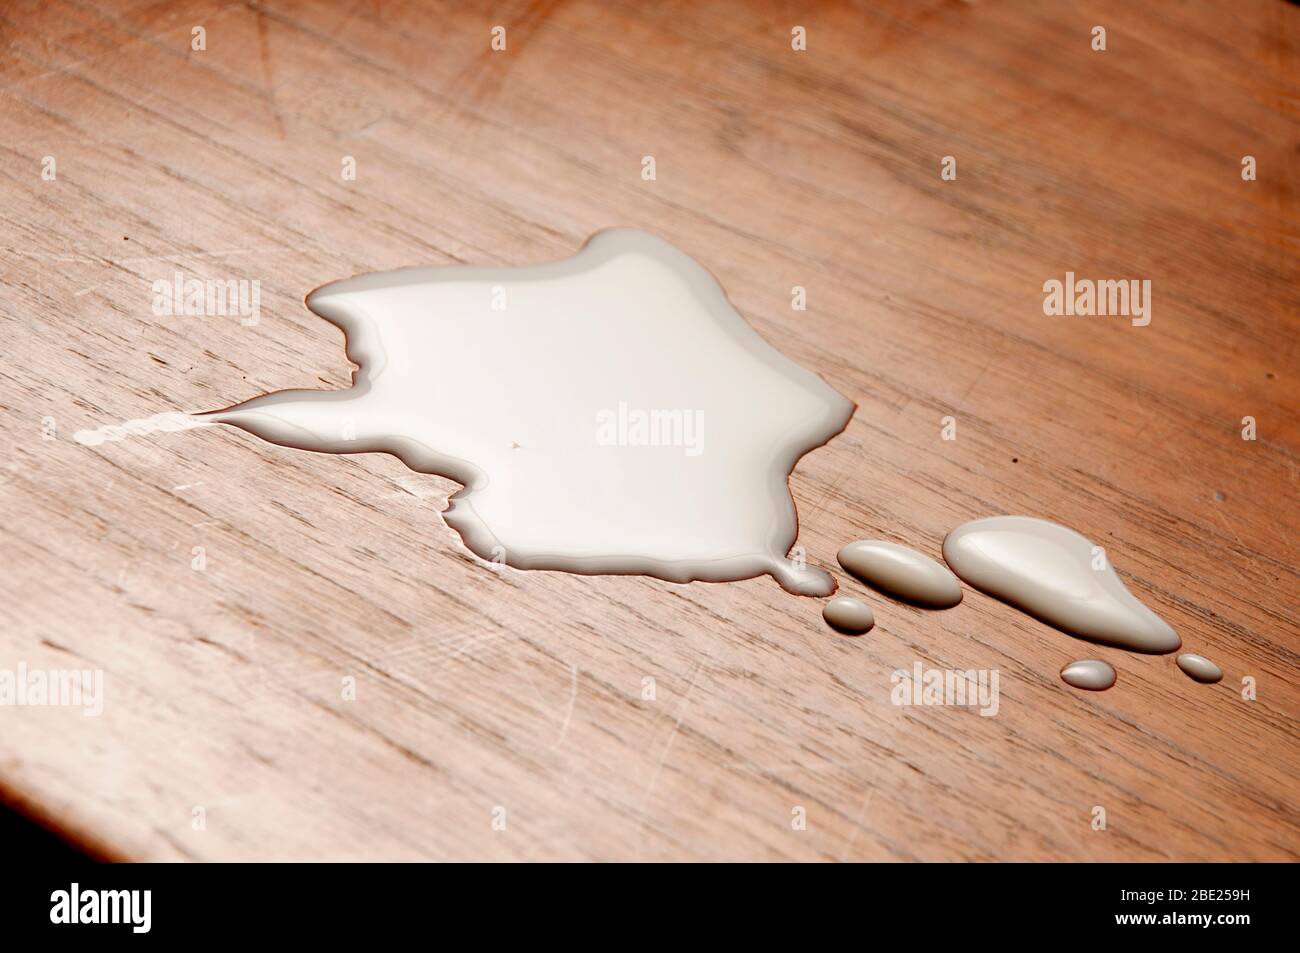 la leche derramada o las gotitas de leche derramadas sobre una mesa Foto de stock